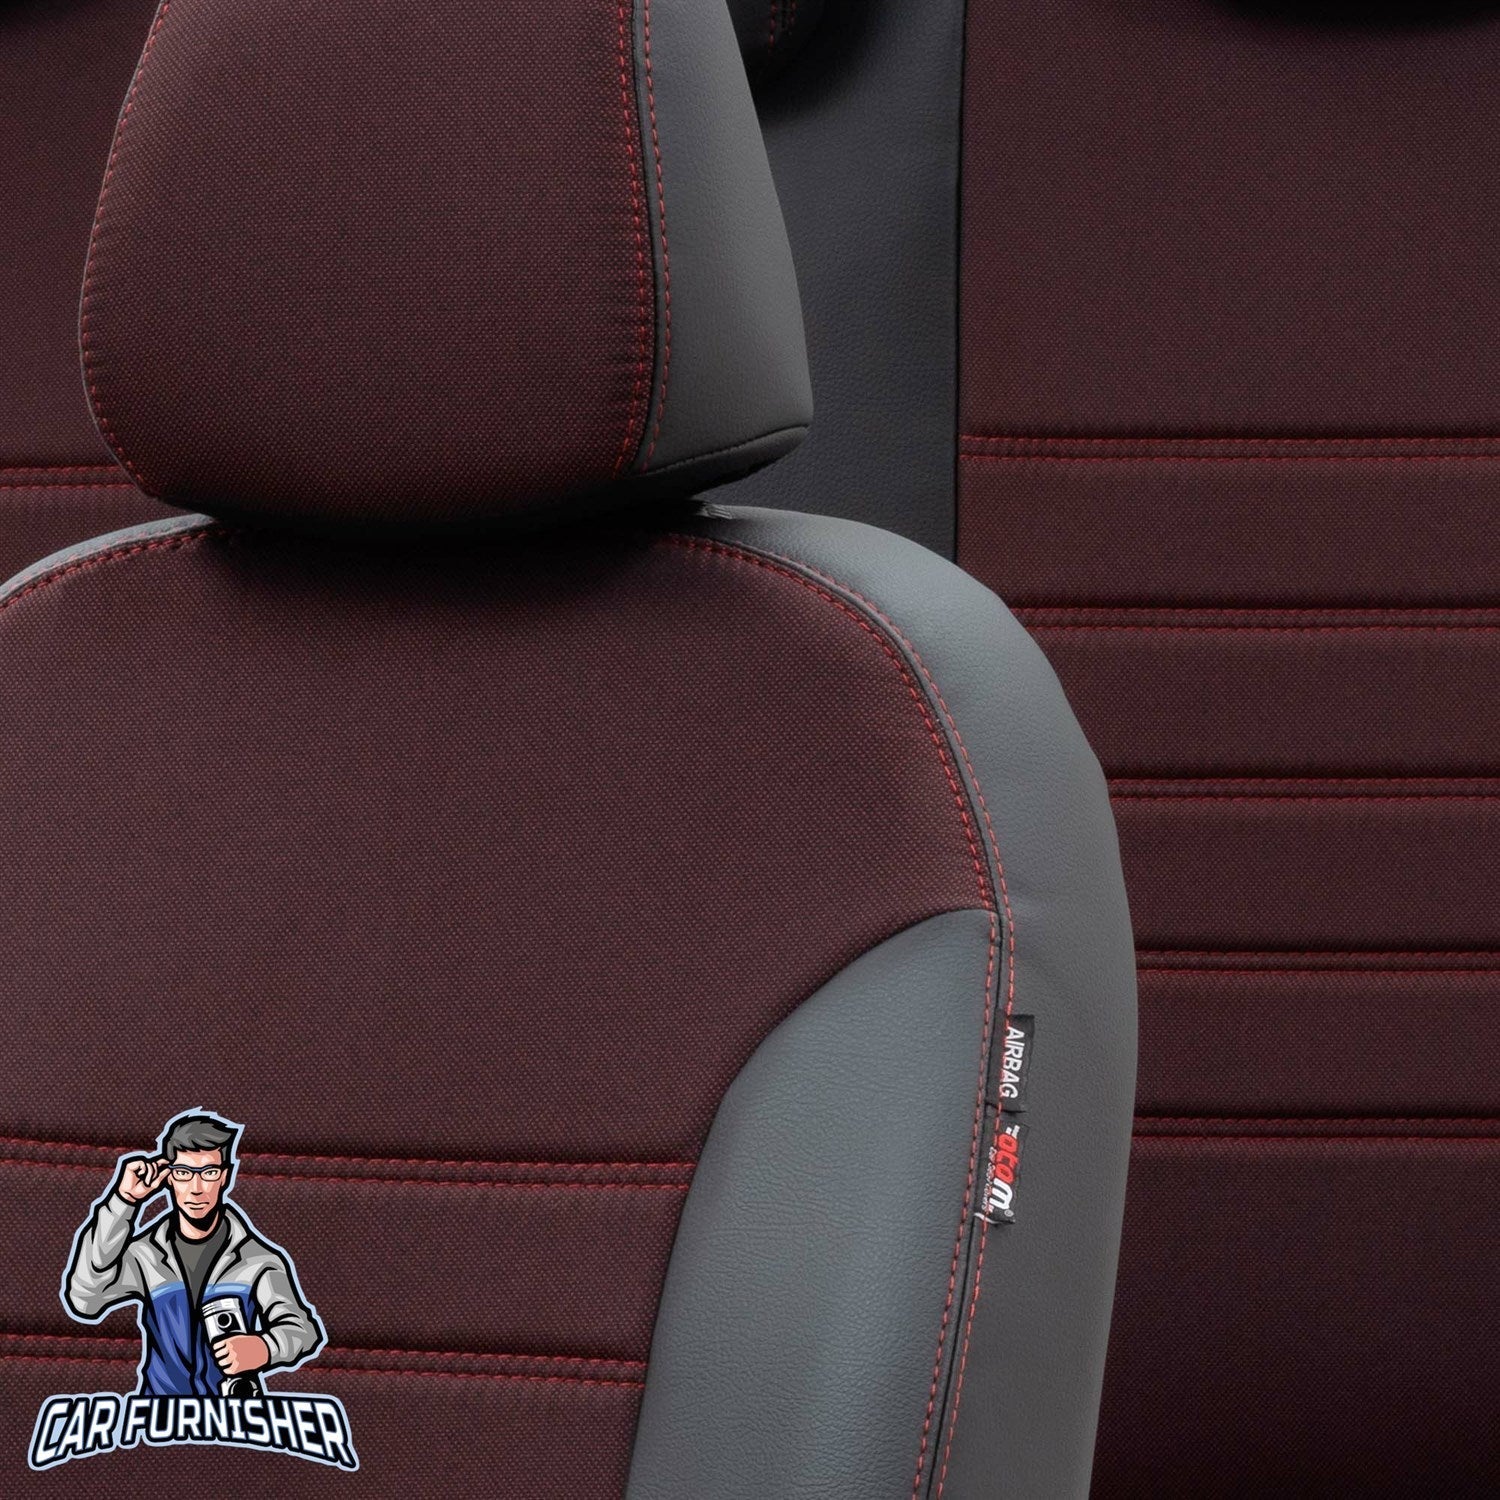 Fiat Linea Car Seat Covers 2007-2017 Paris Design Red Full Set (5 Seats + Handrest) Leather & Fabric